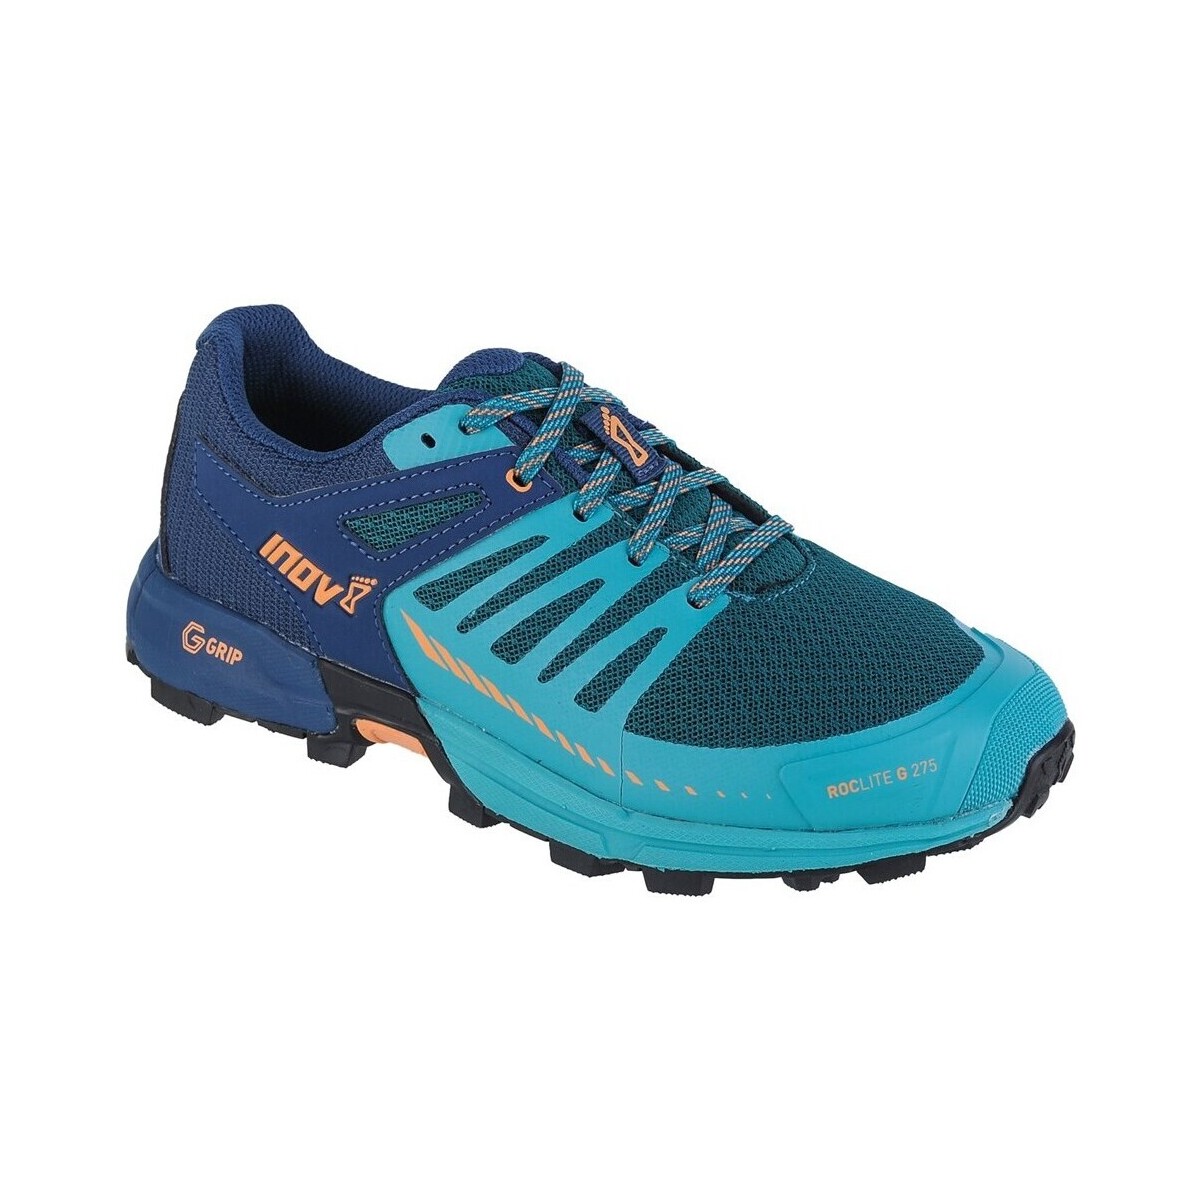 inov 8  roclite g 275 v2  women's running trainers in blue